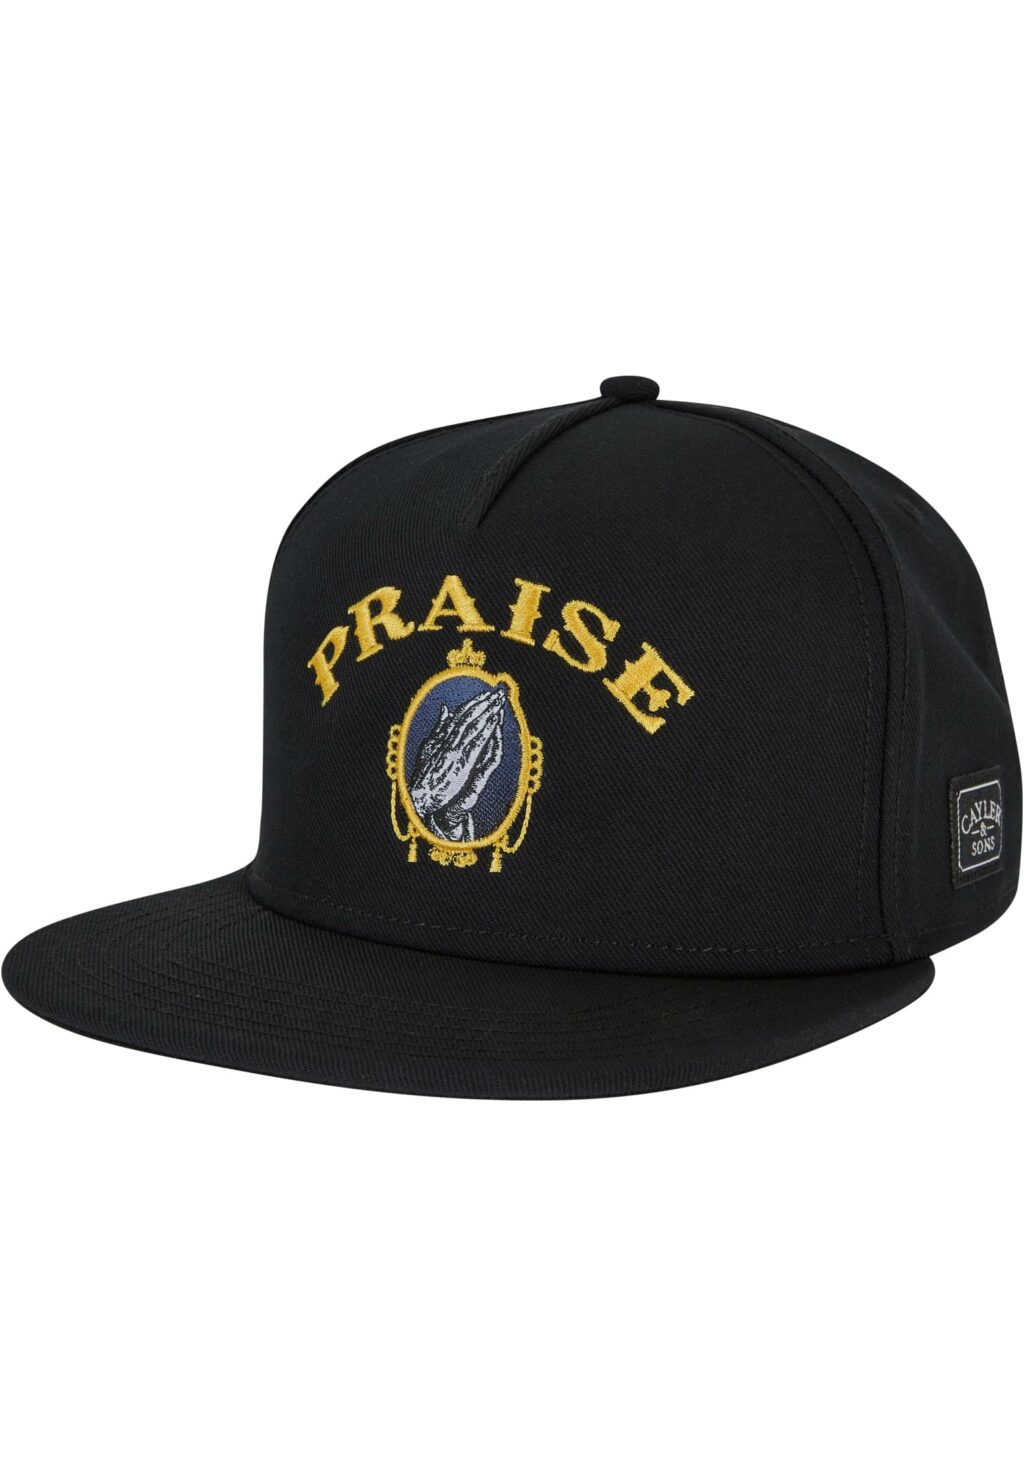 Praise the Chronic P Cap black one CS3086